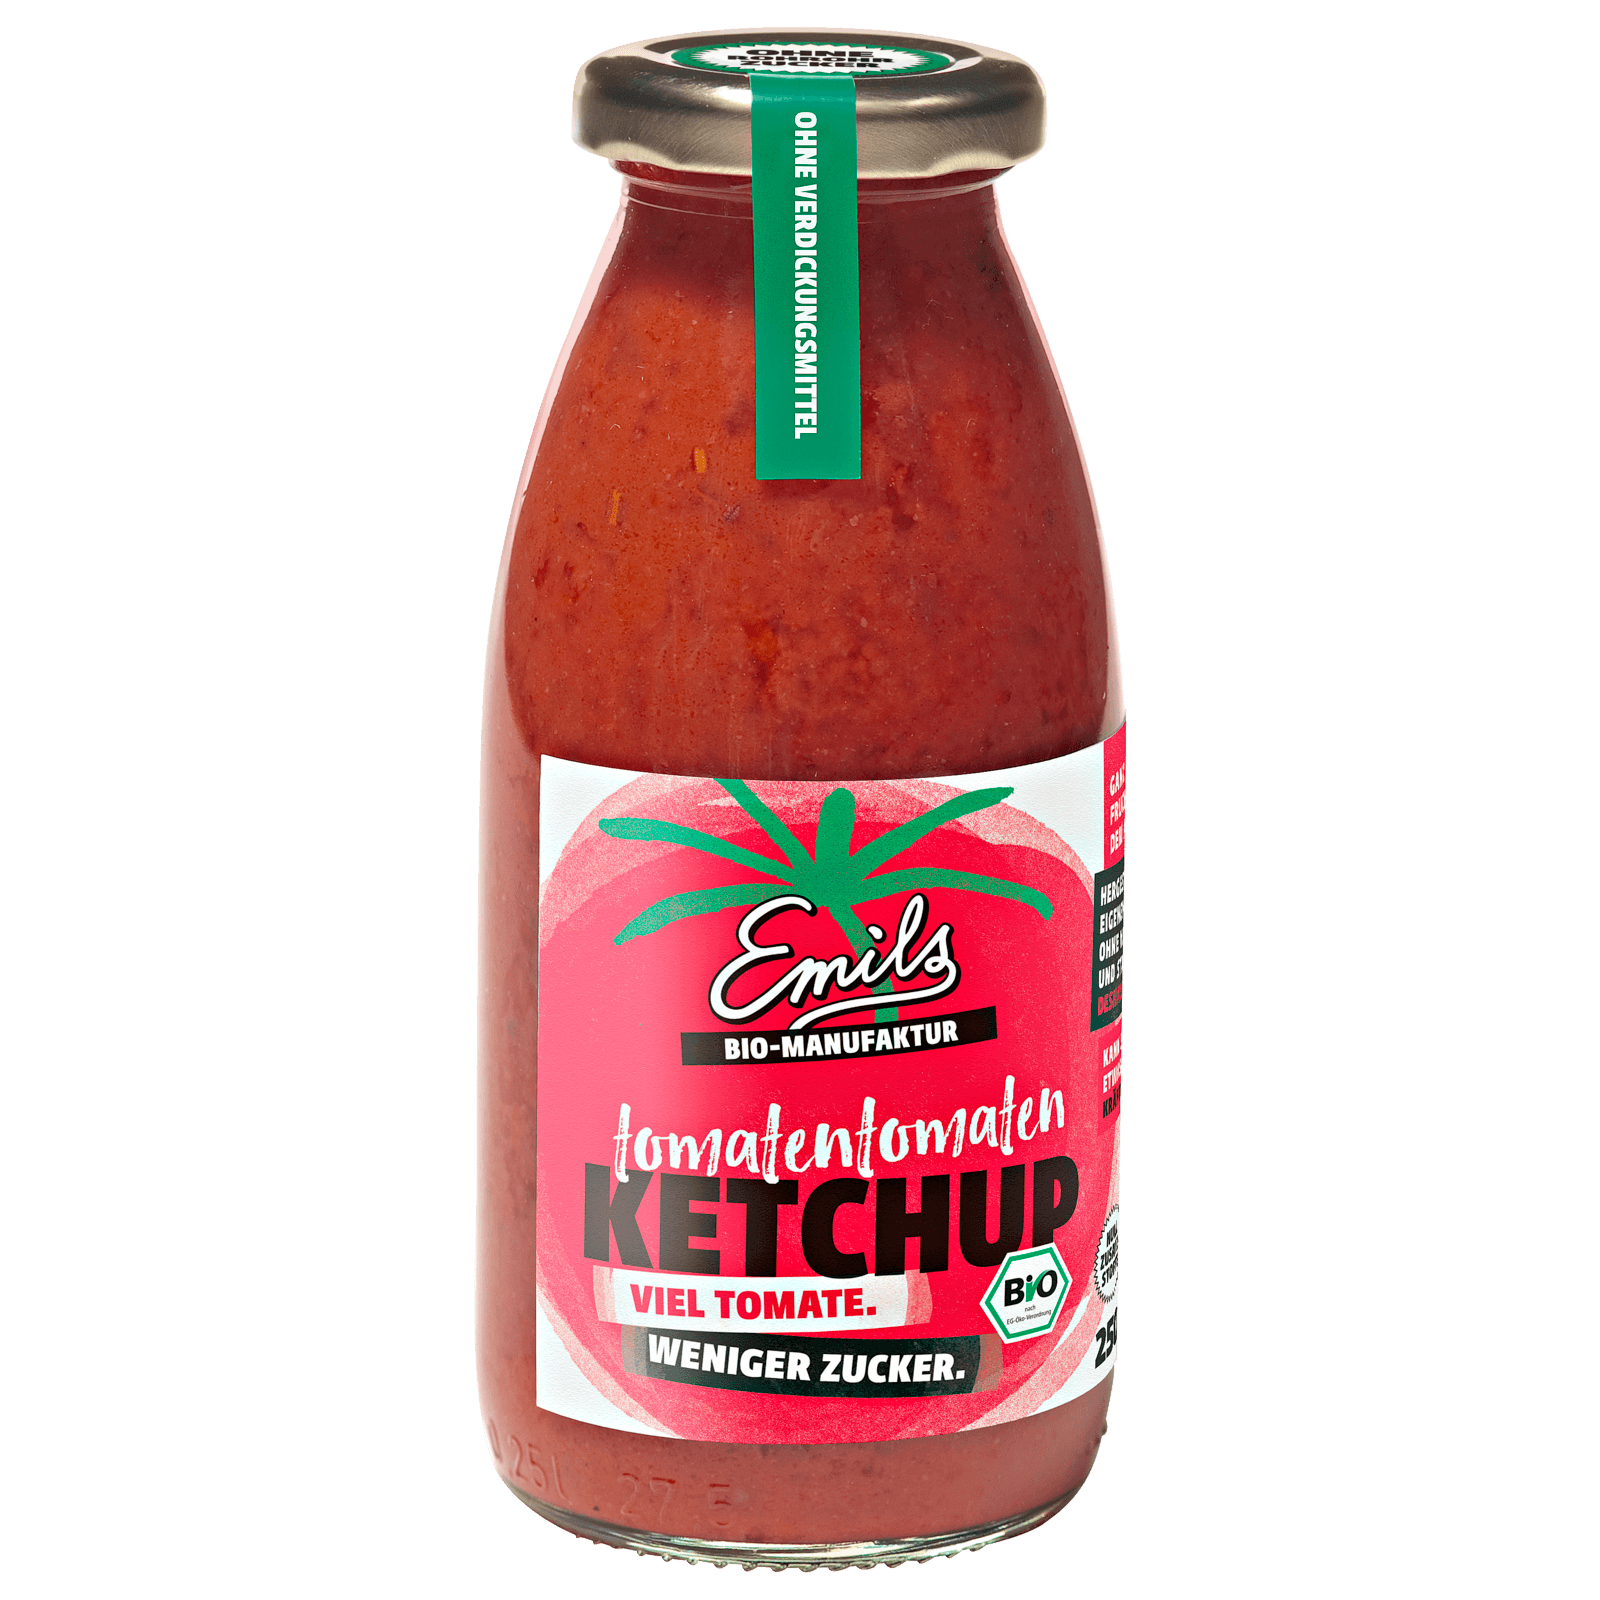 Emils Bio Tomatenketchup 250ml bei REWE online bestellen!